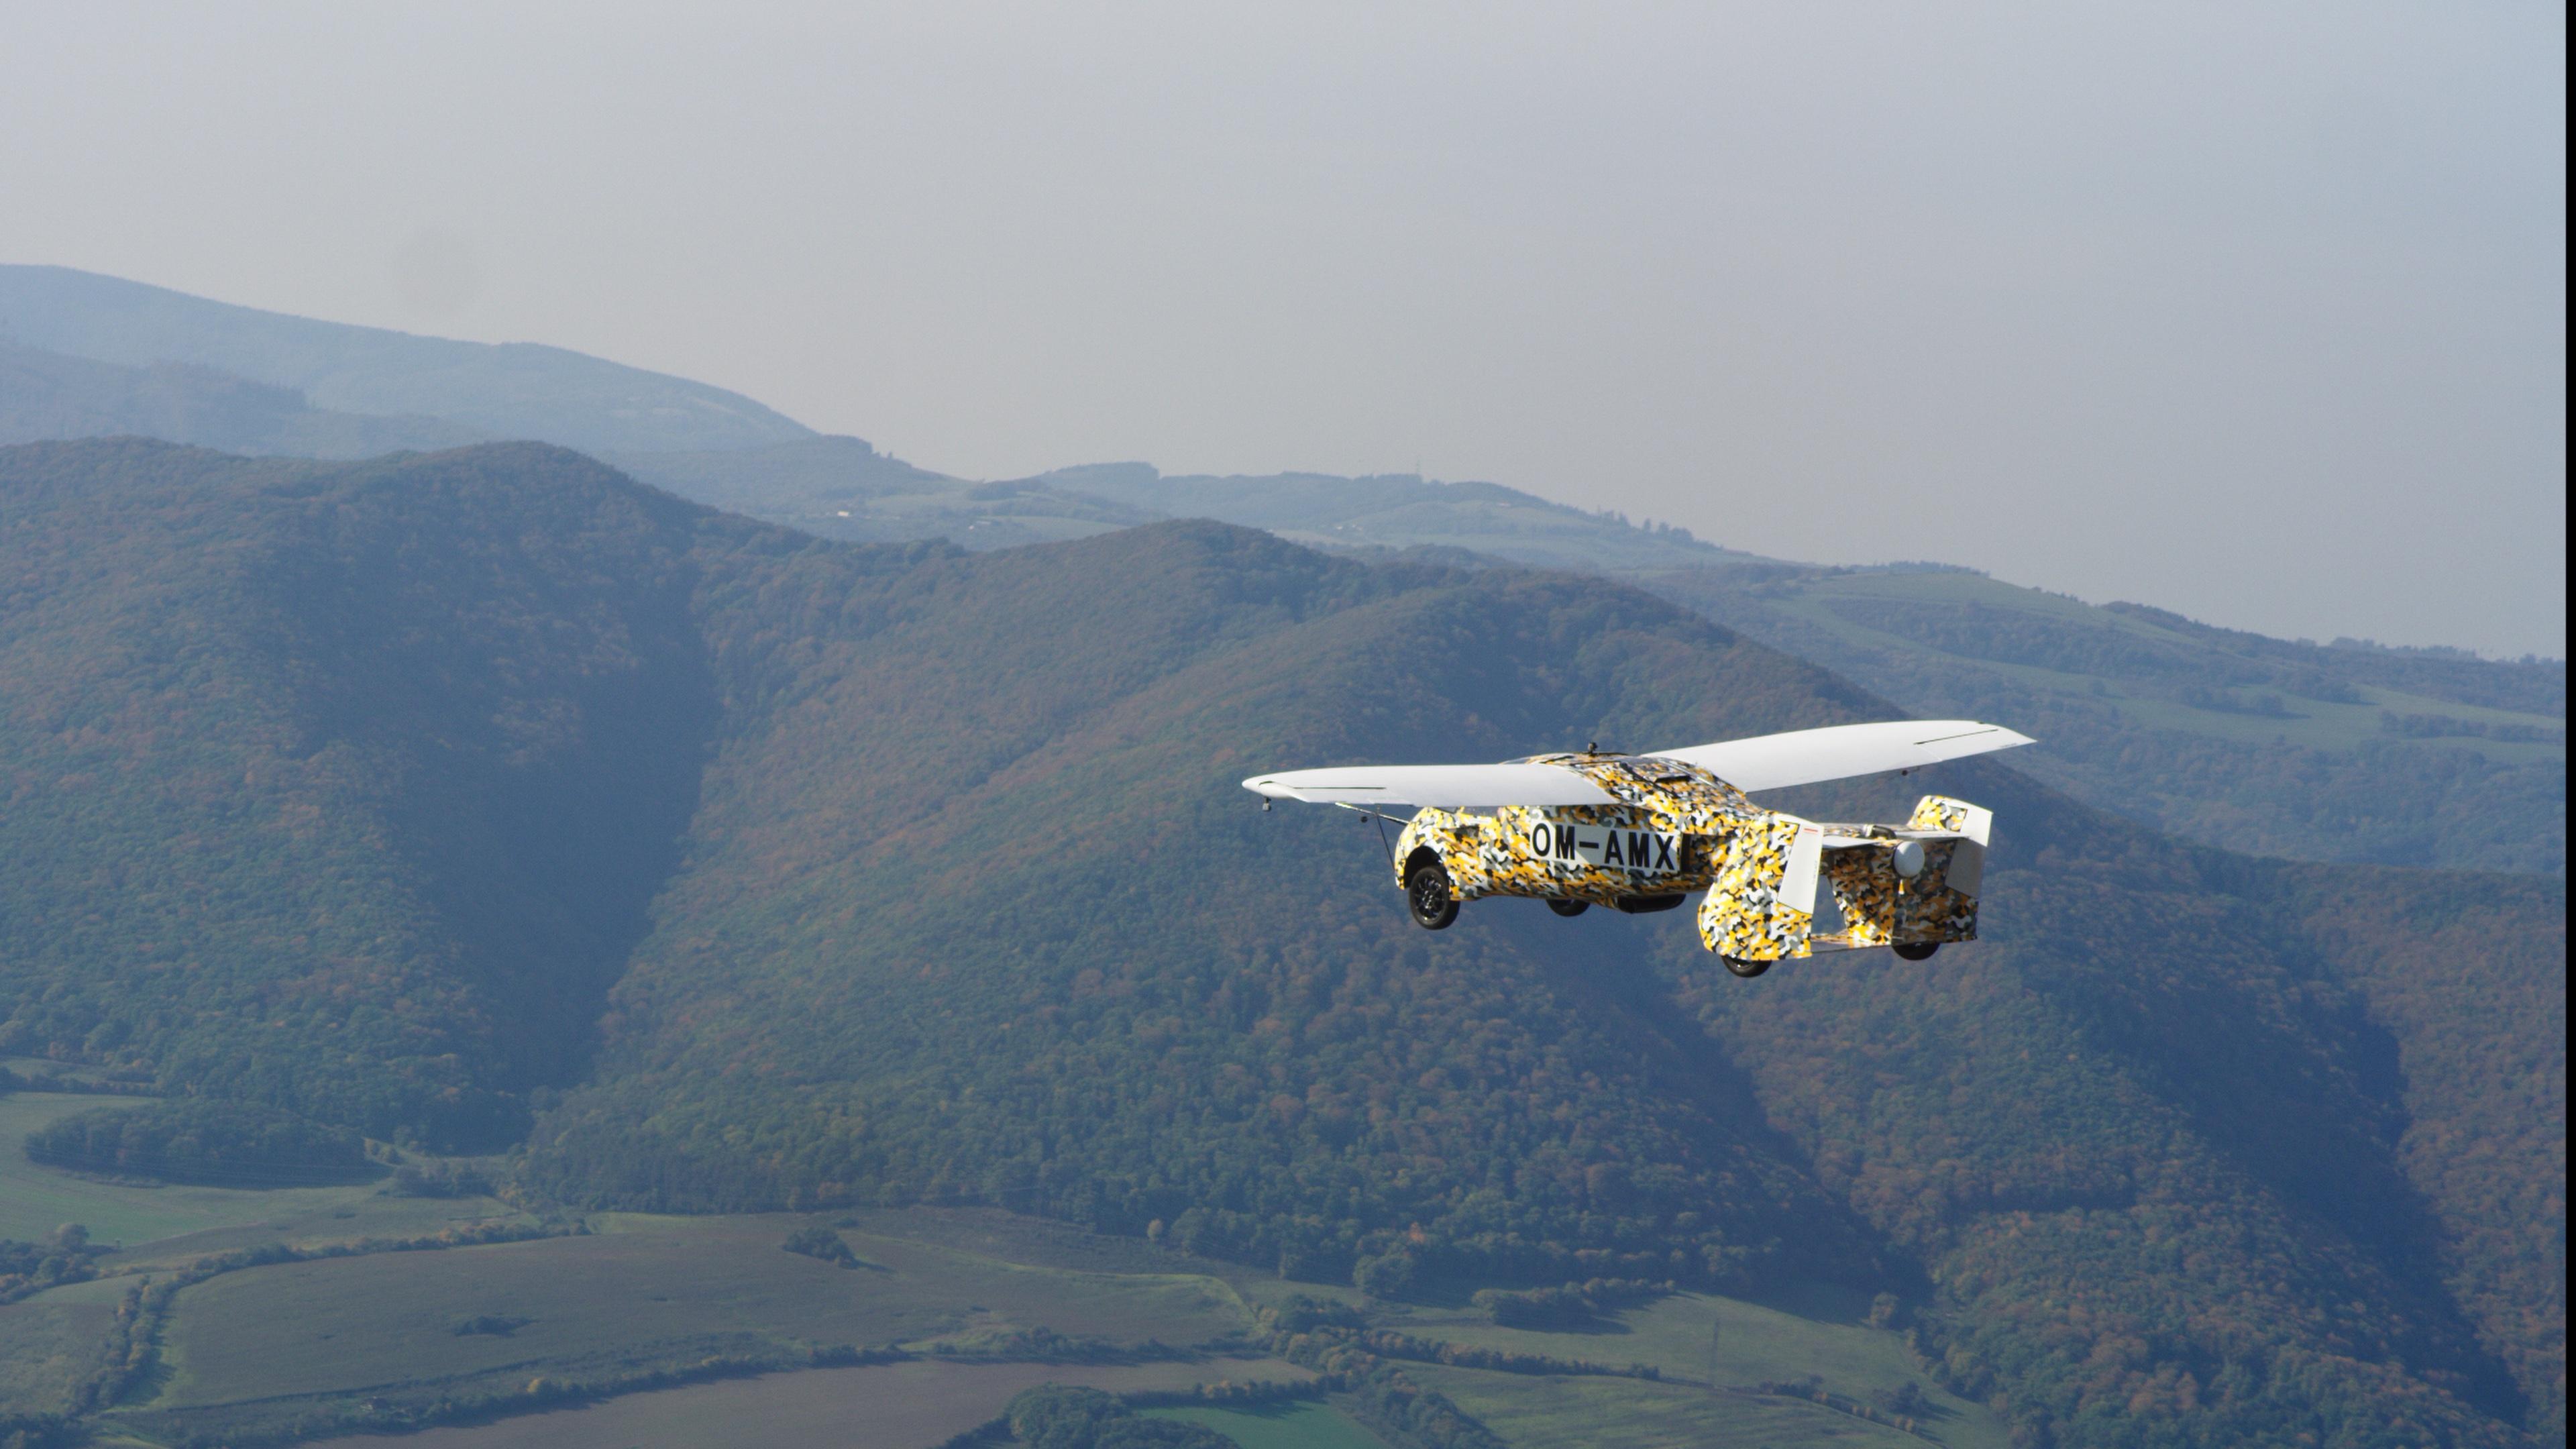 An AeroMobil flying car on a test flight.